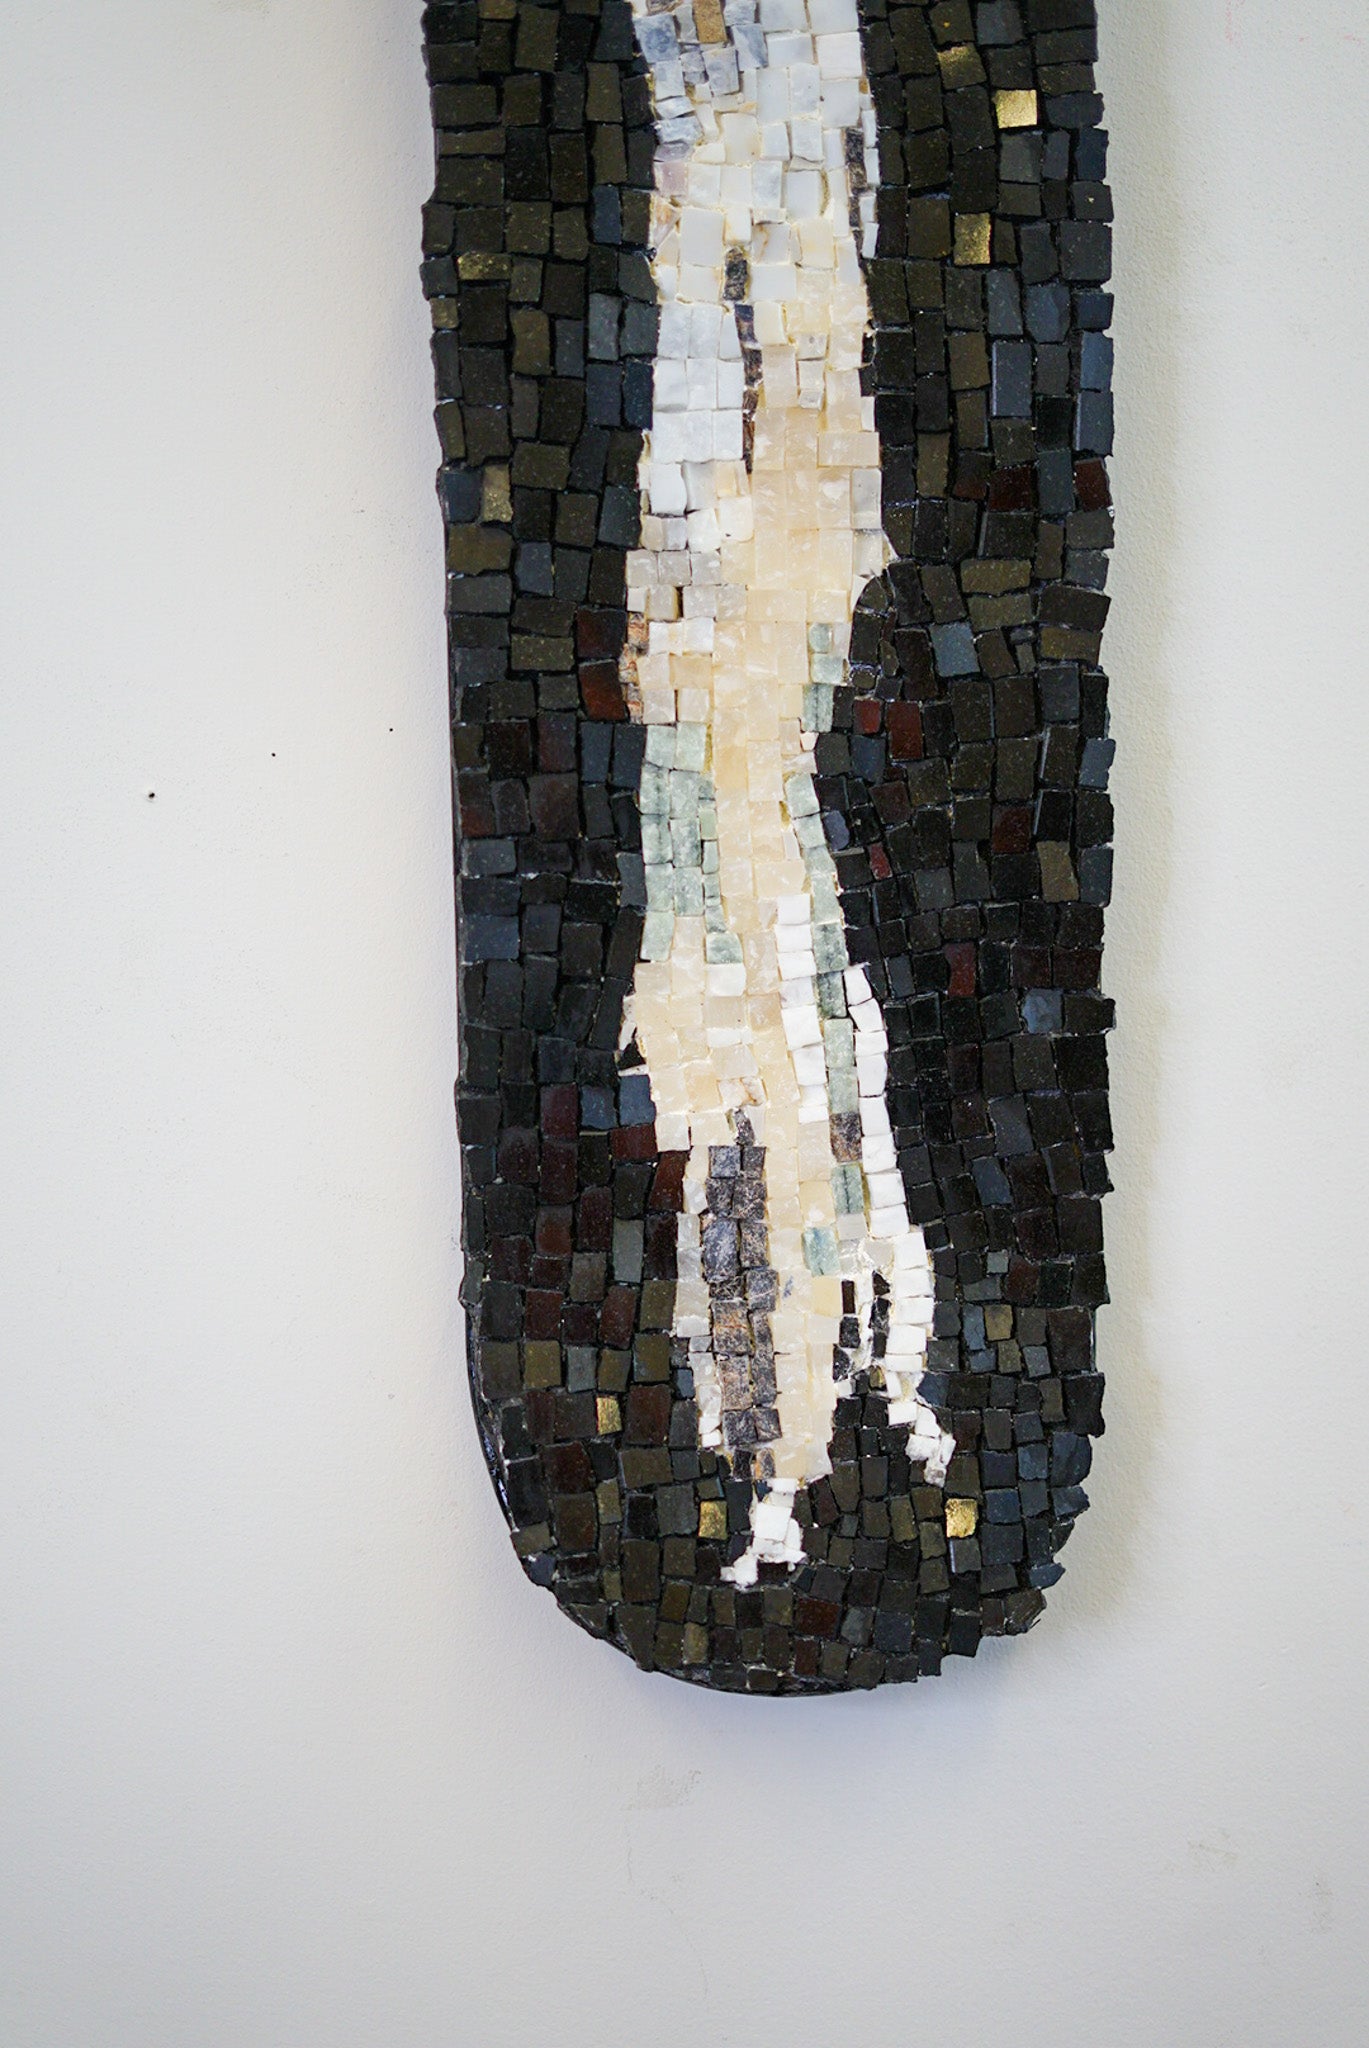 Subway Spirit 1. Marble and Granite Roman Style Mosaic on Skateboard